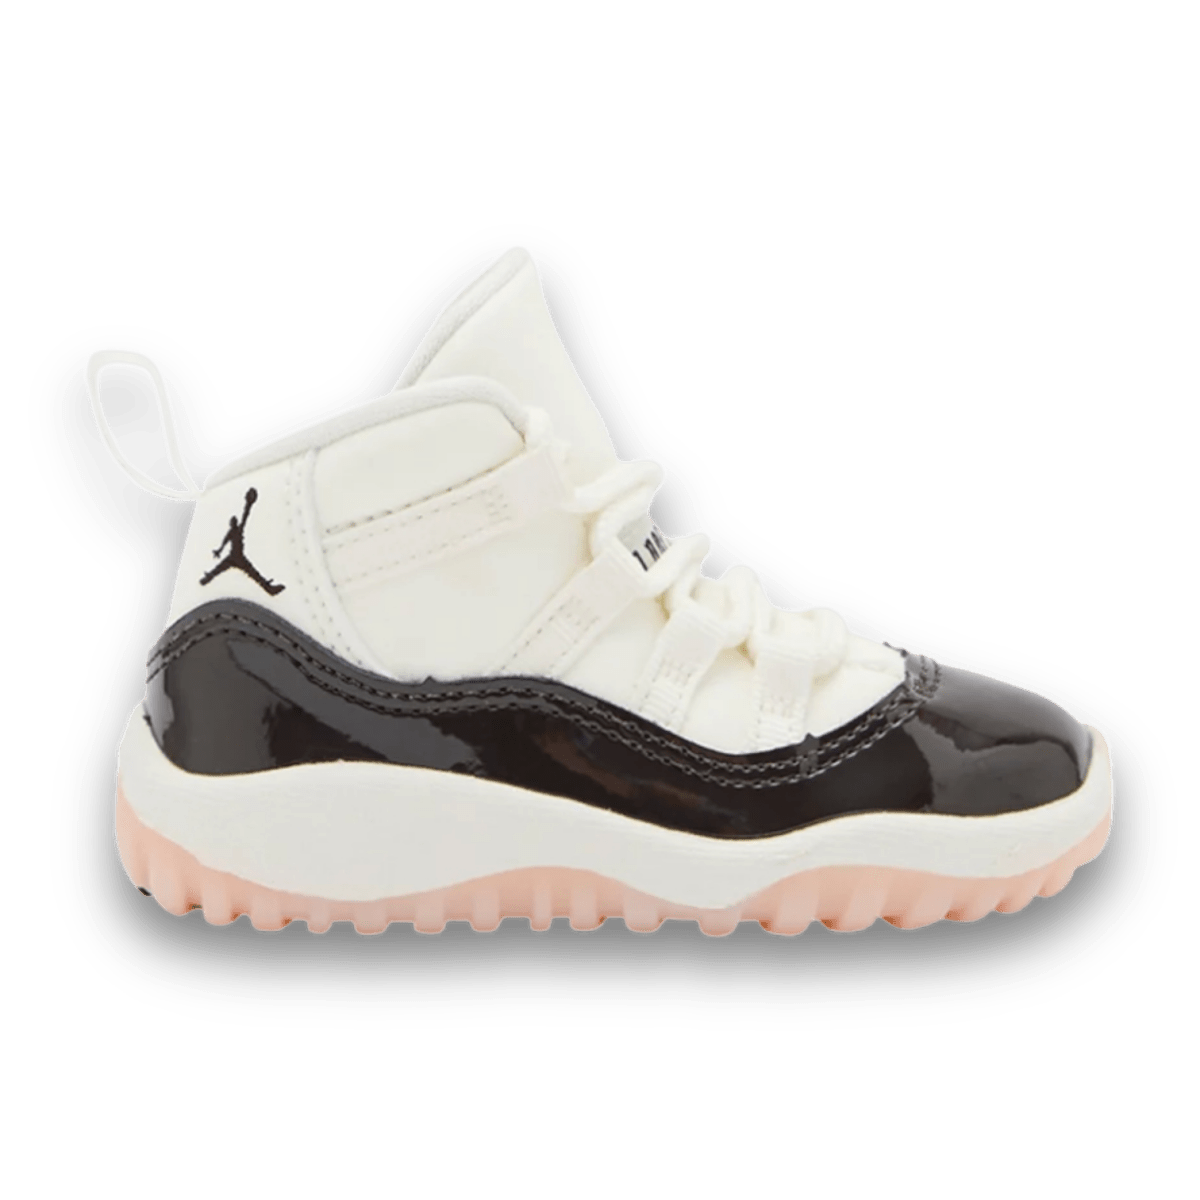 Air Jordan 11 Retro 'Neapolitan' - Pre-School - High Sneaker - Jawns on Fire Sneakers & Streetwear